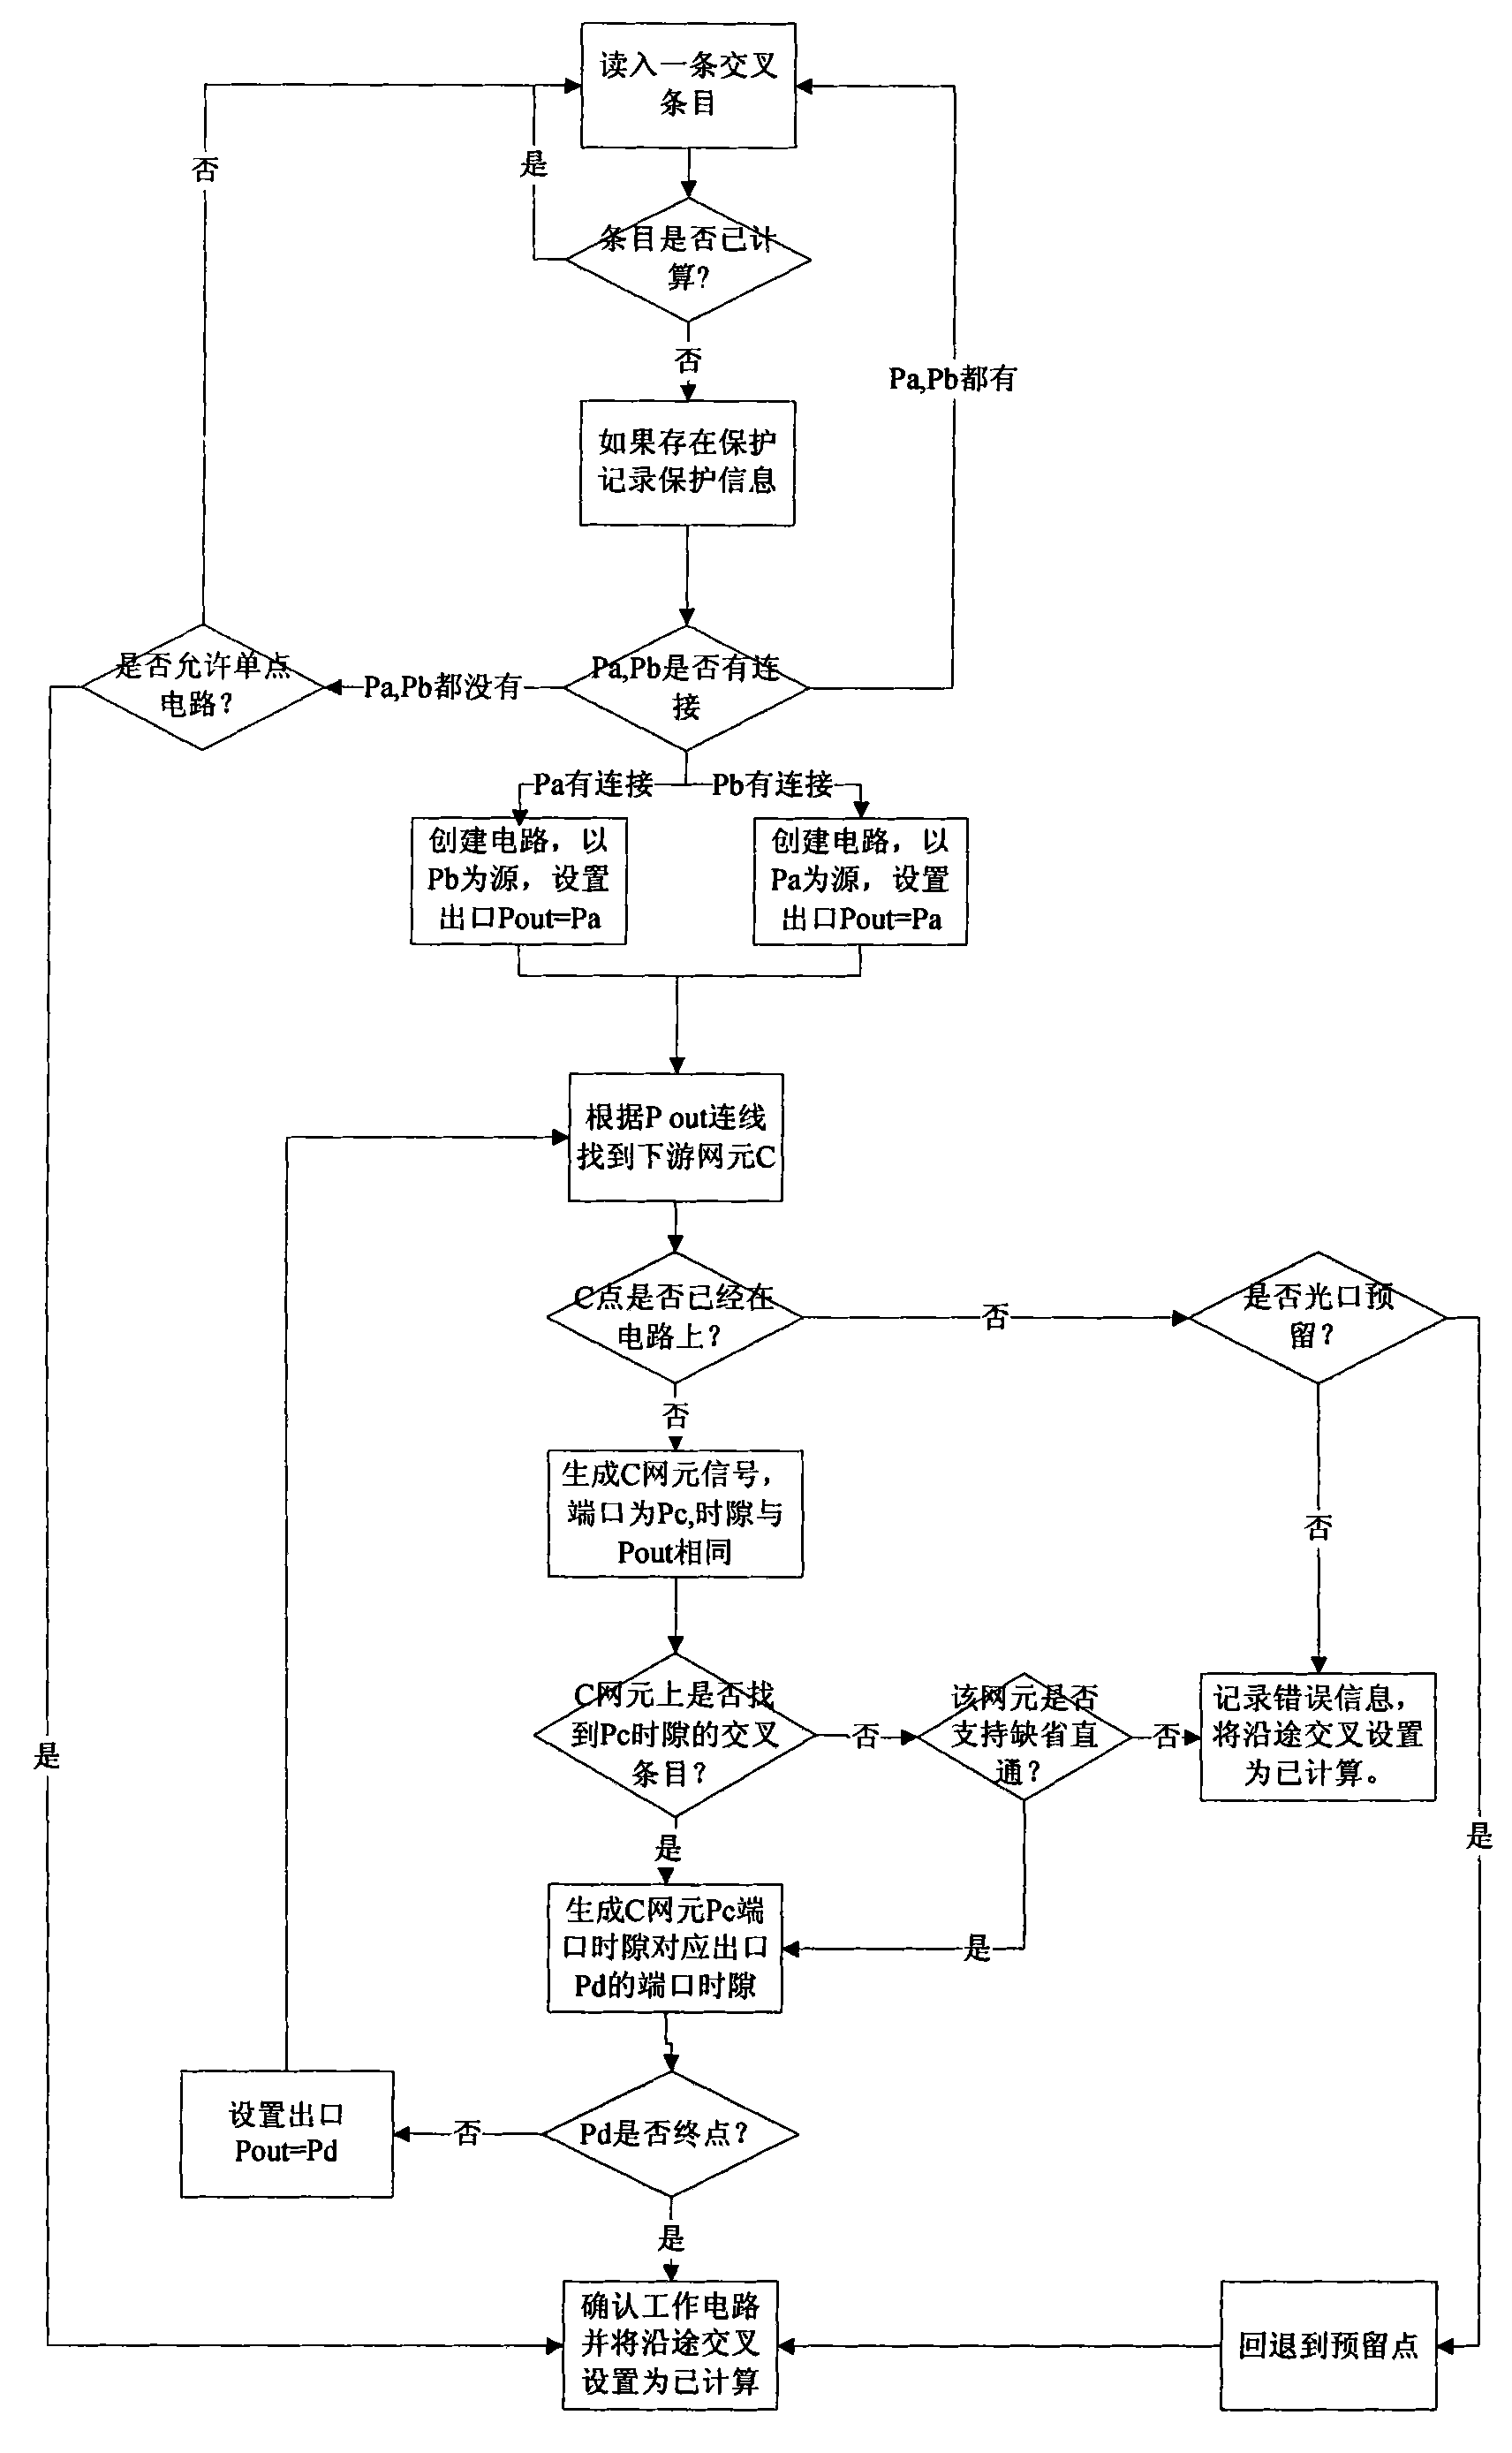 Script description-based transmission network circuit information generating method and system